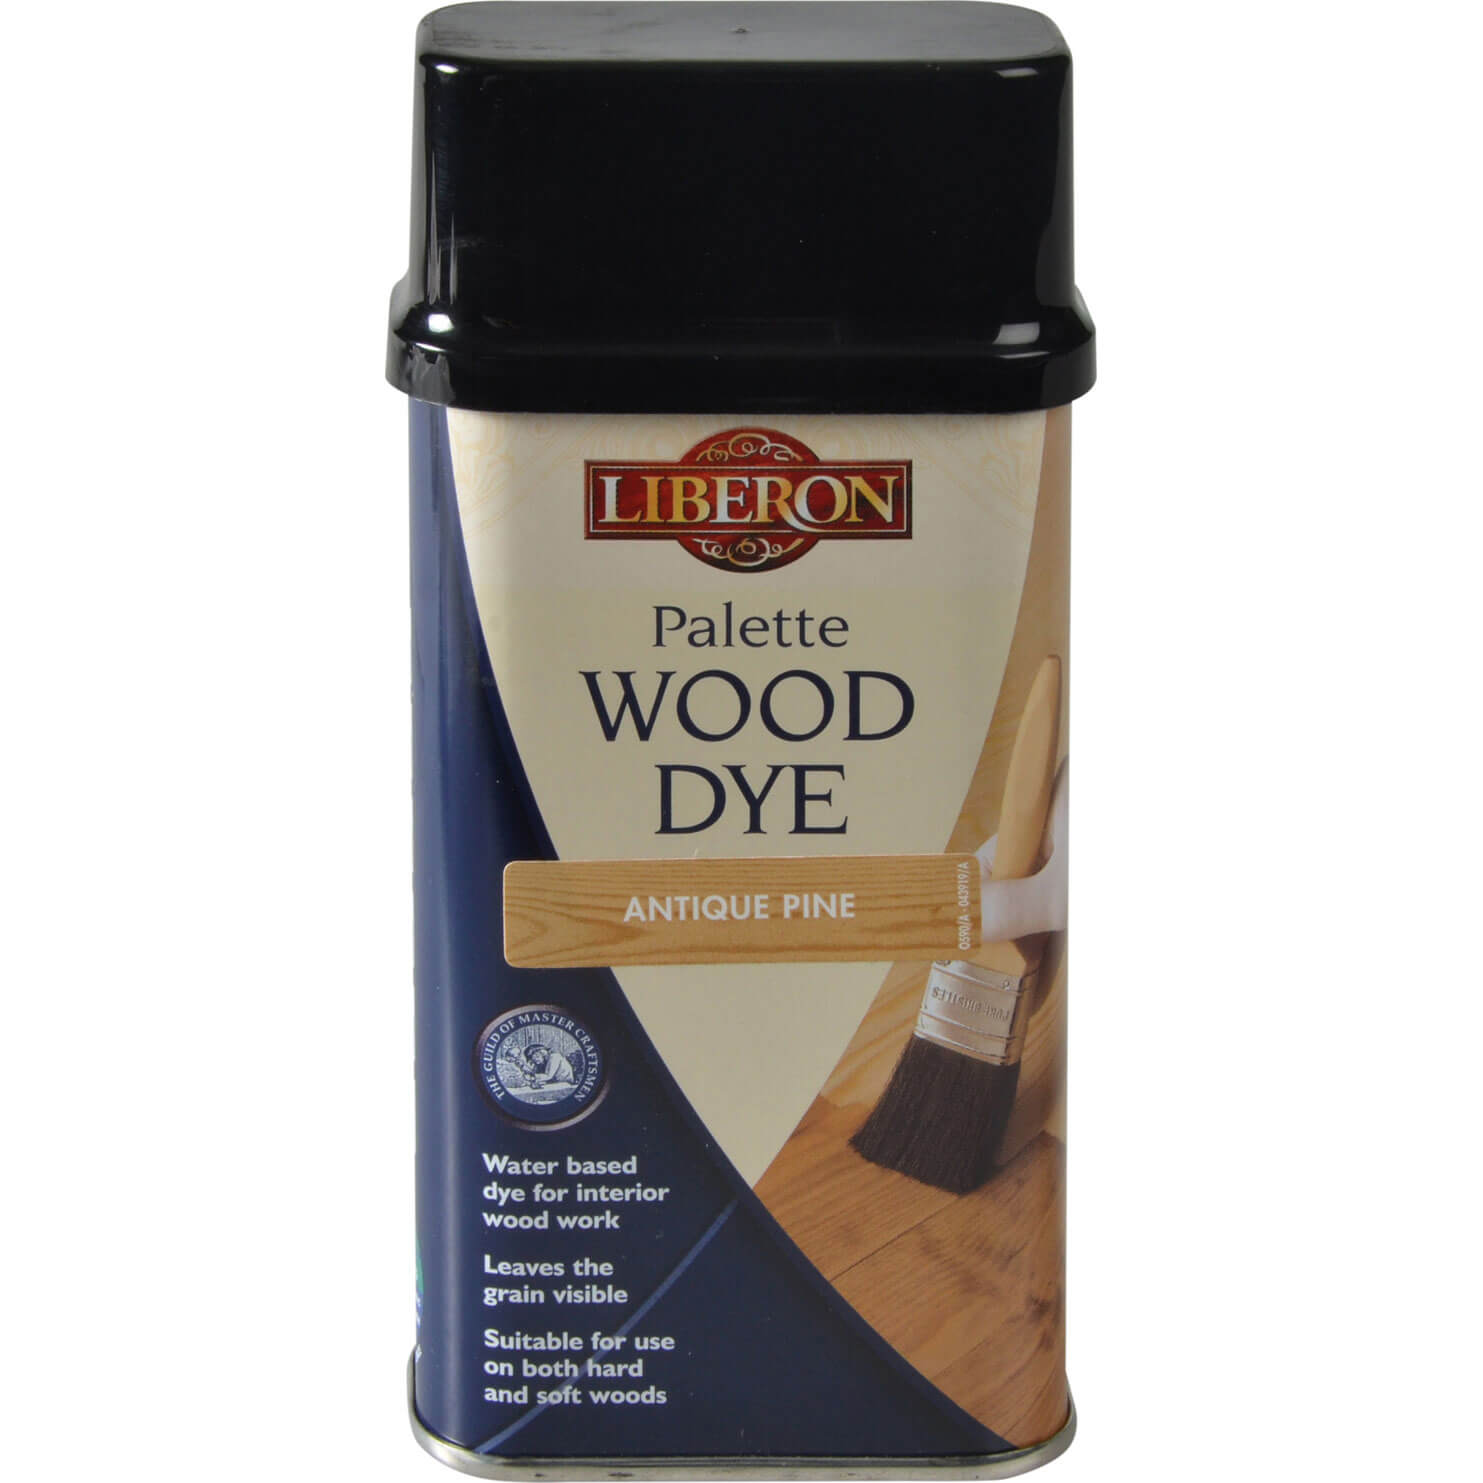 Photos - Varnish Liberon Palette Wood Dye Antique Pine 250ml 